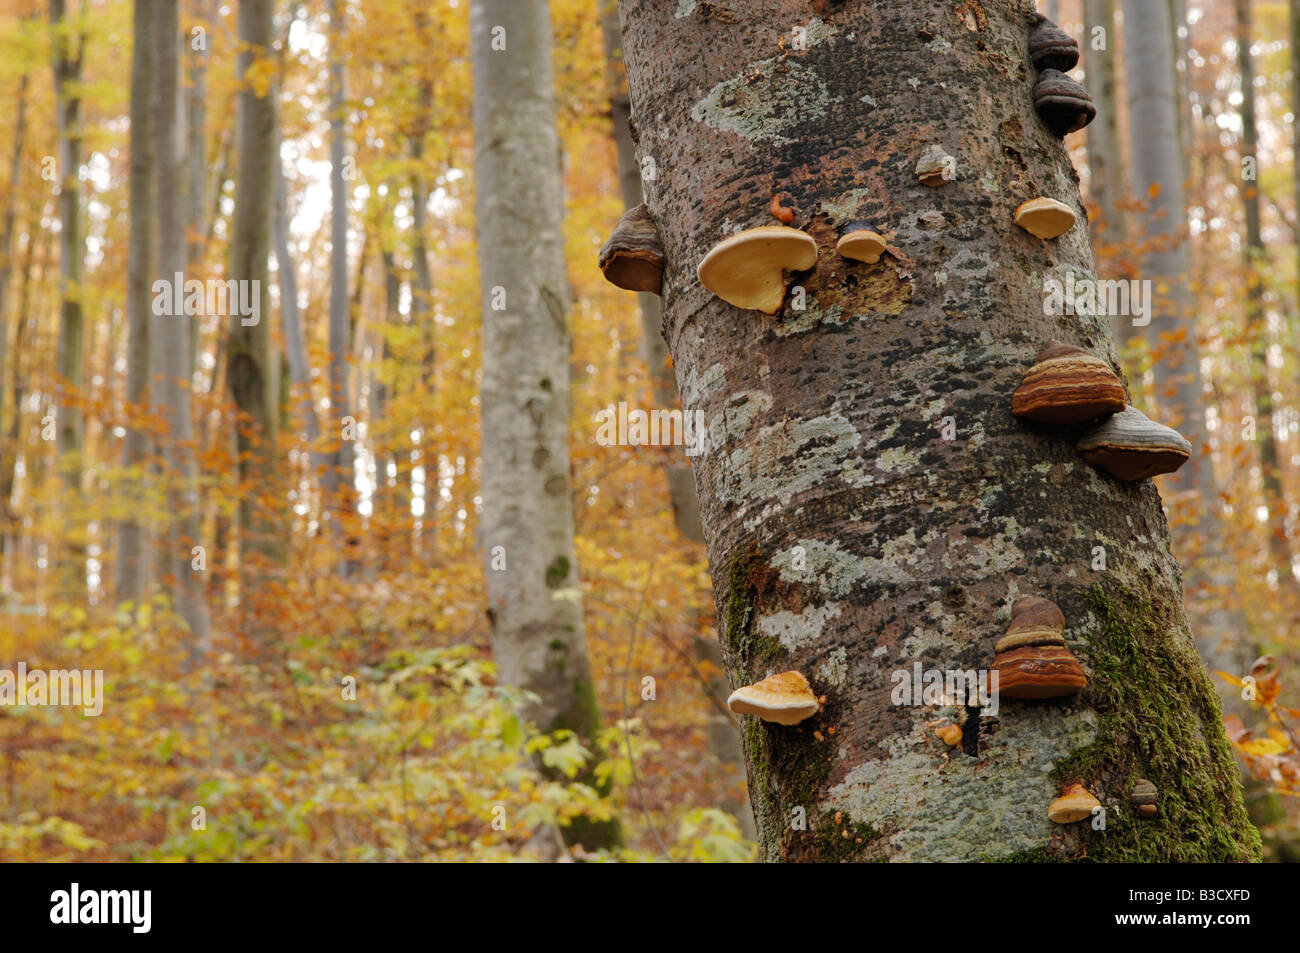 Germany, Bavaria, tree mushrooms on trunk, close up Stock Photo